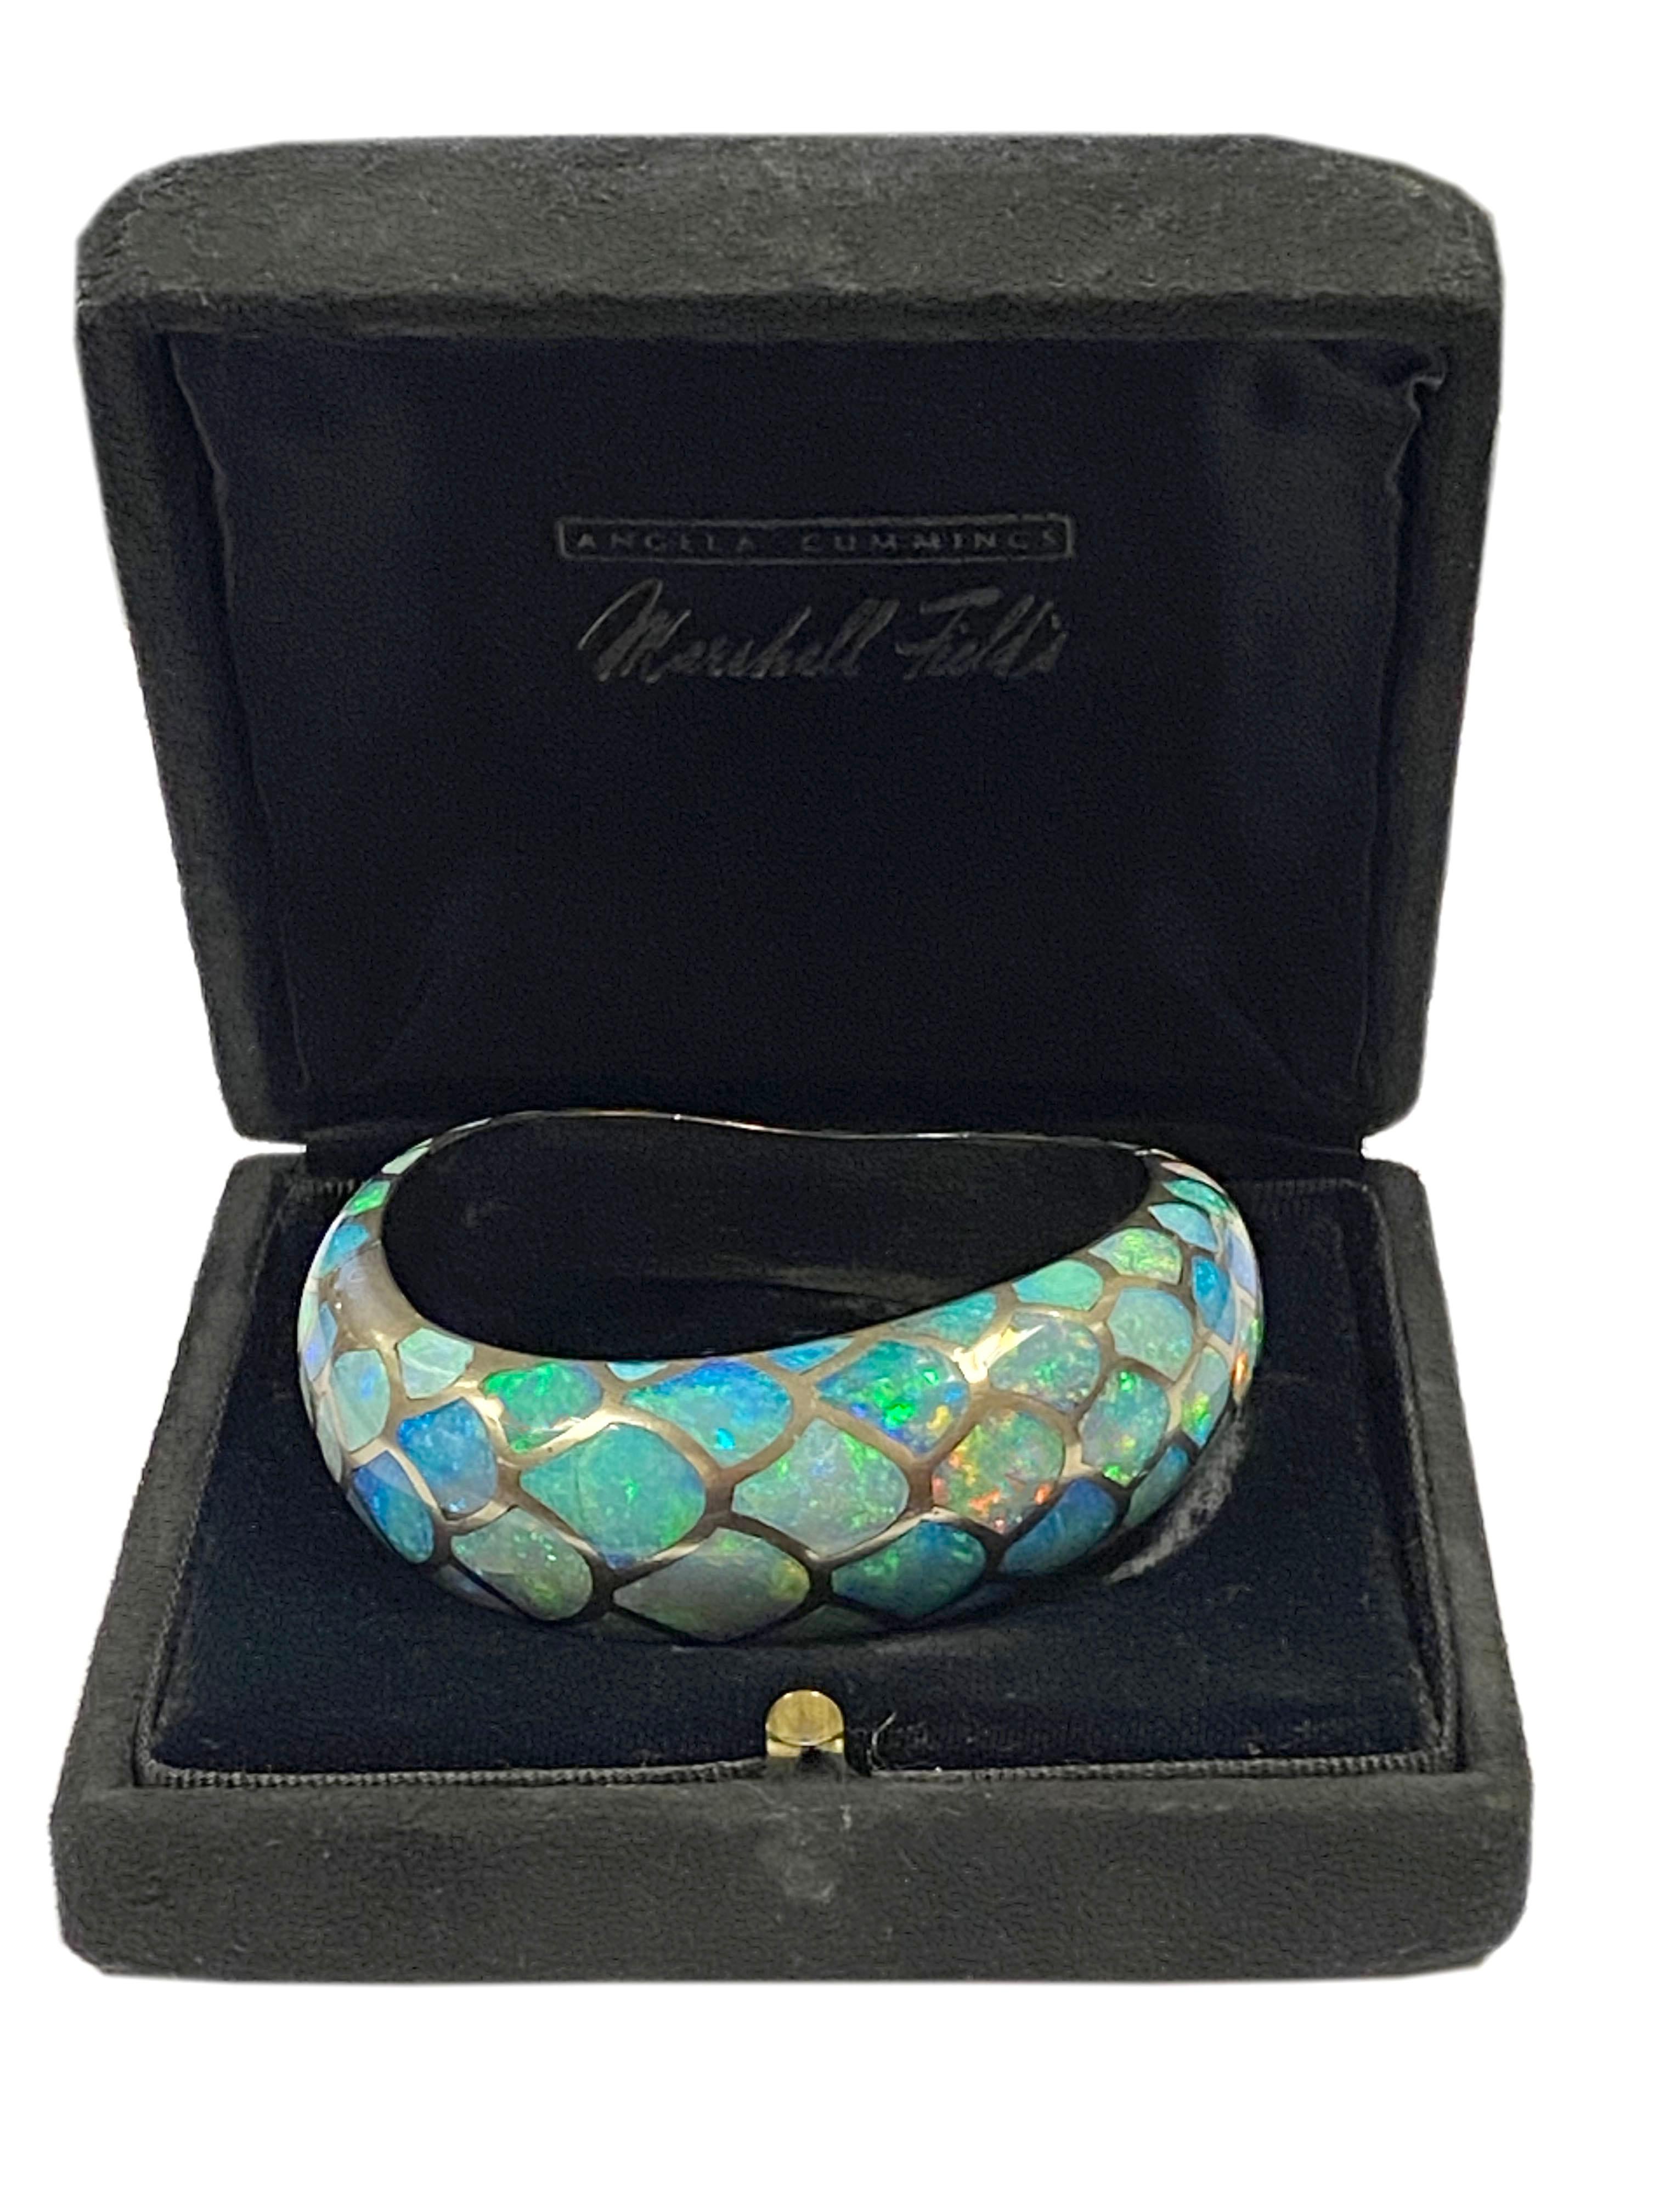 Angela Cummings White Gold and Opal Snakeskin Bangle Bracelet For Sale 7